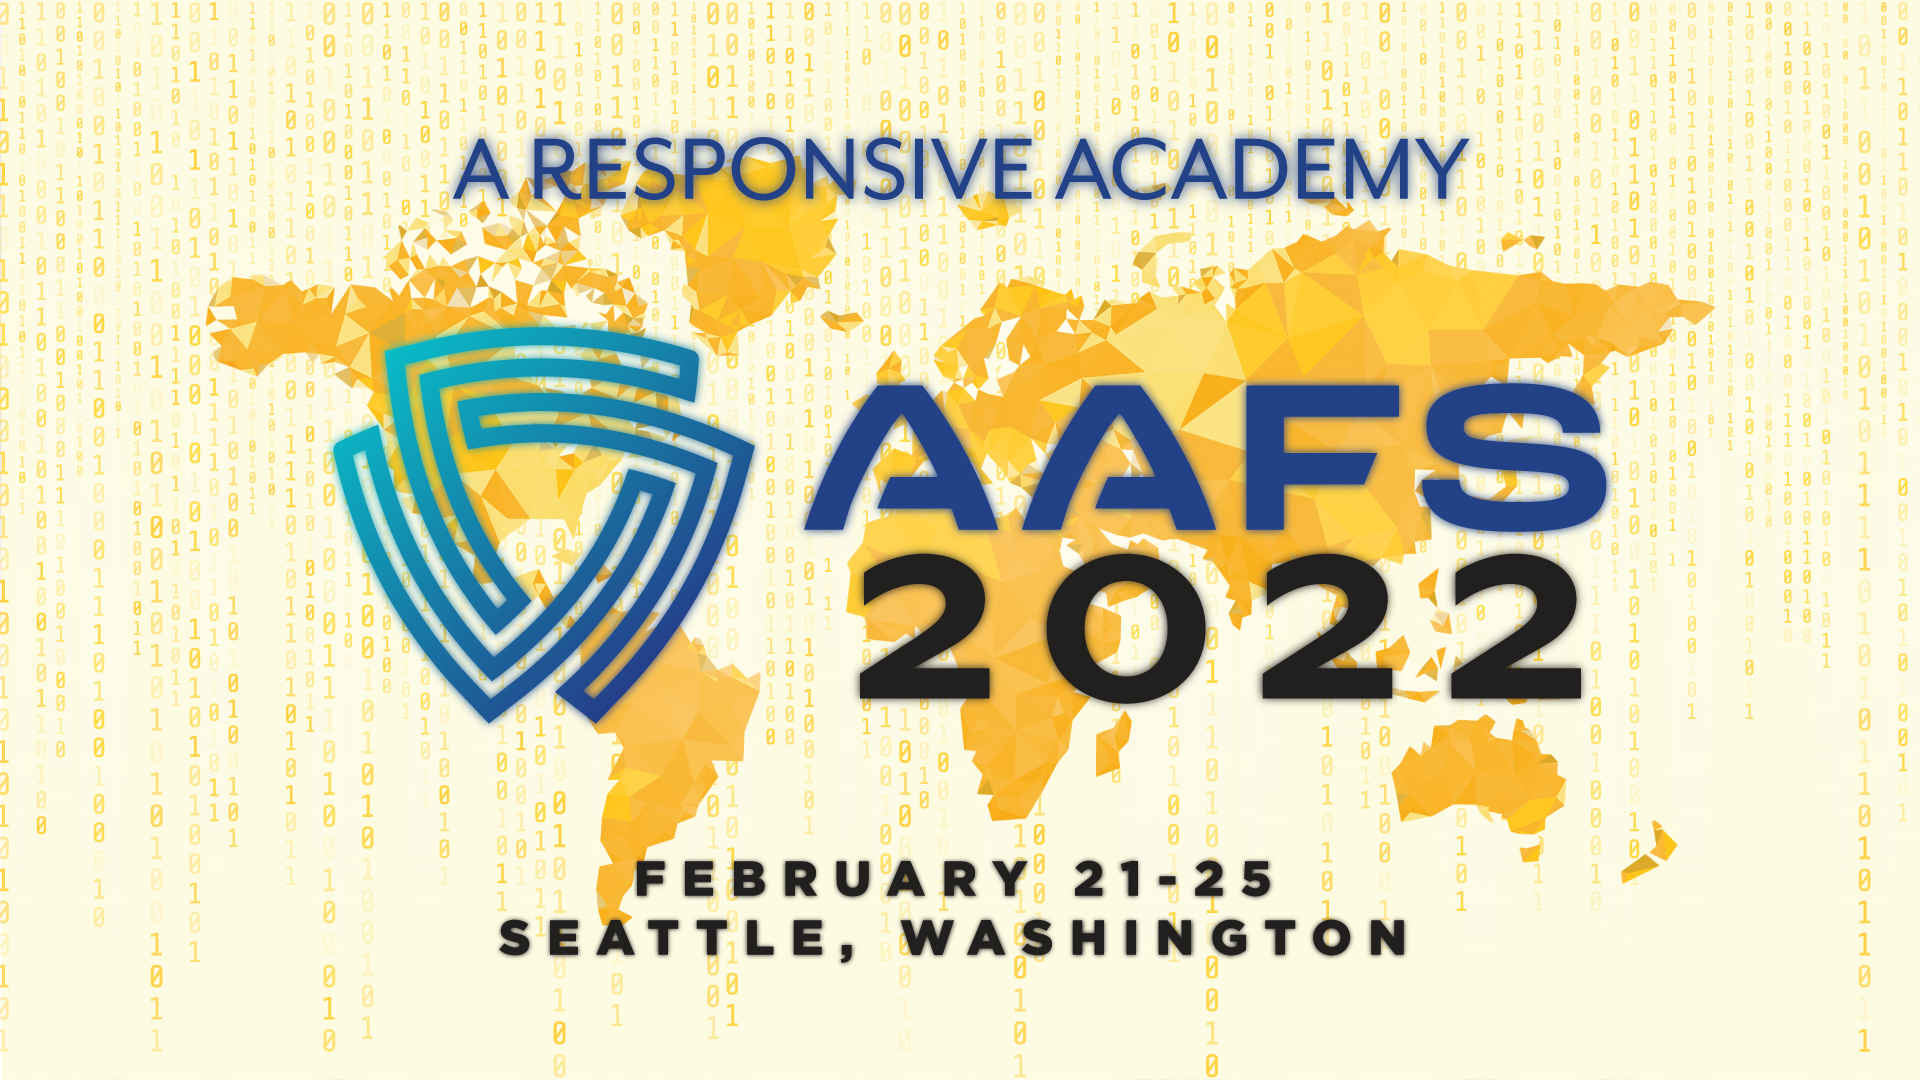 AAFS Annual Scientific Meeting 2022 Forensic Focus